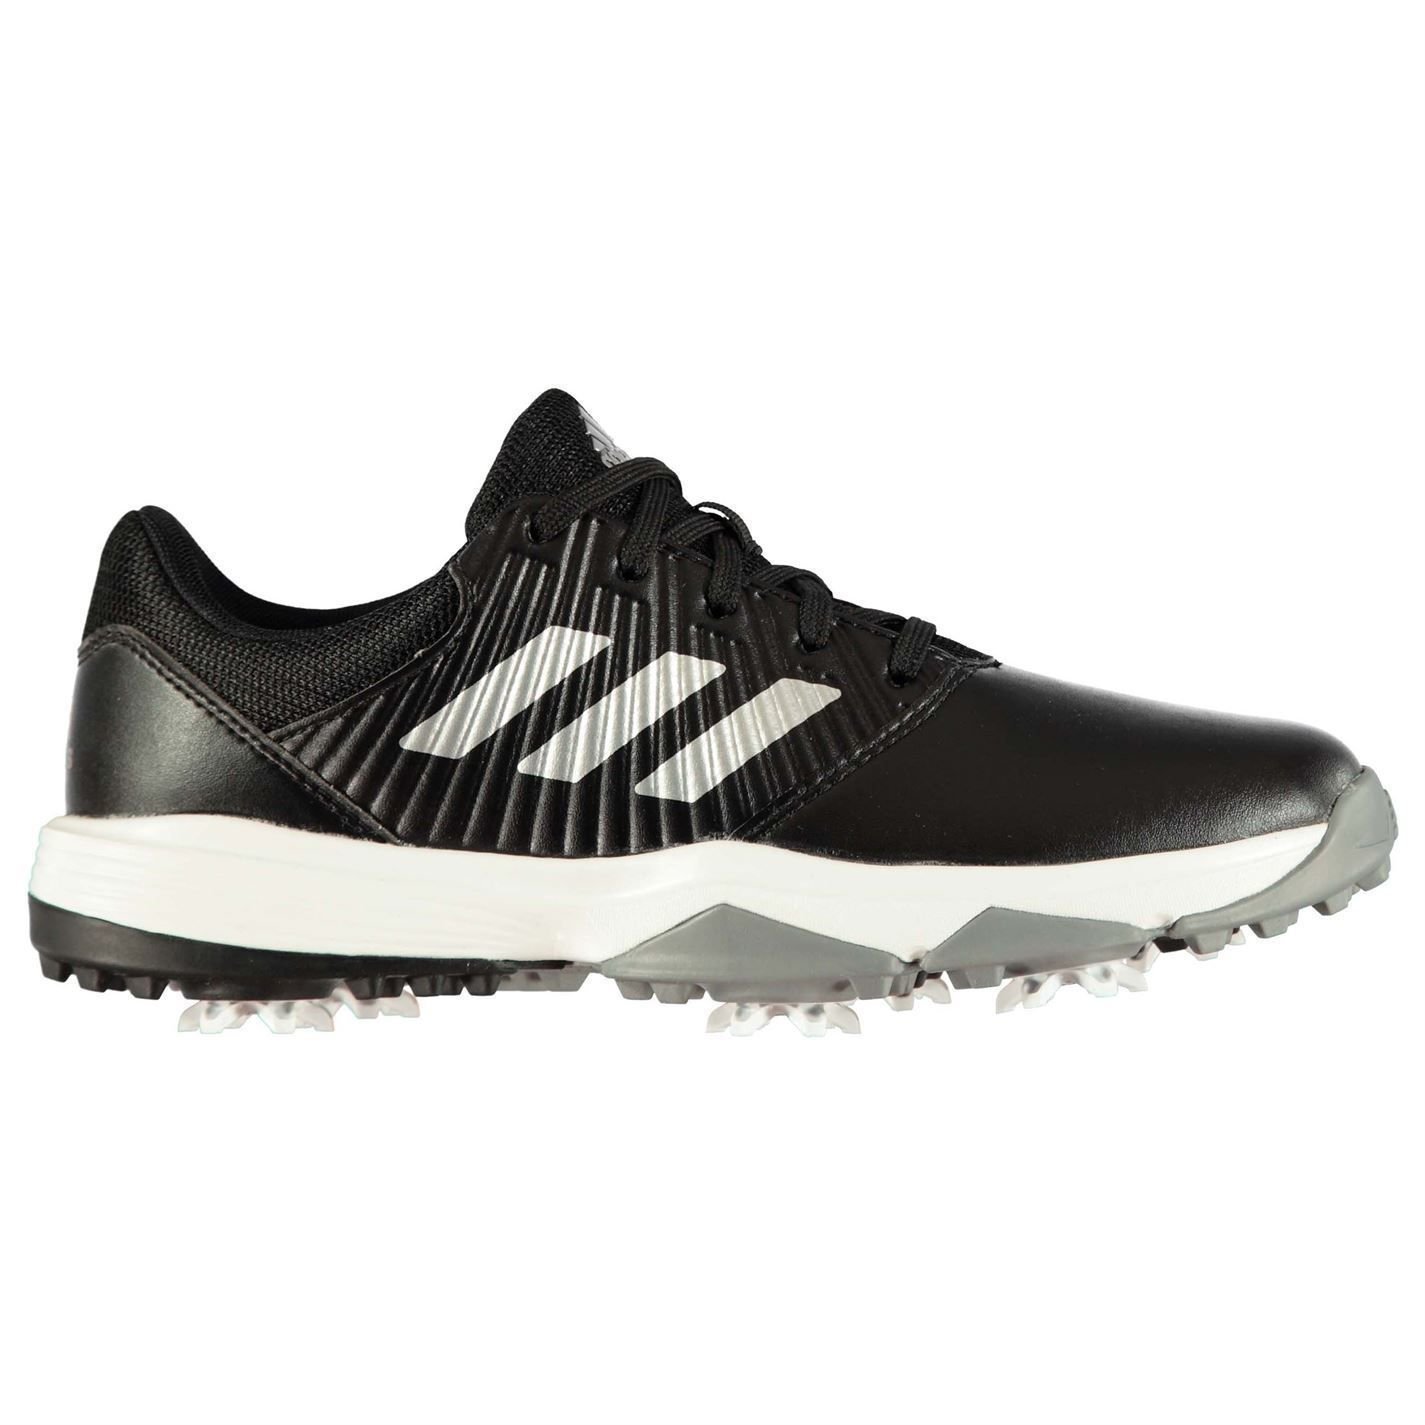 Calzado de golf junior Adidas CP Traxion Junior Golf Shoes Core Black/Silver Metal/White UK 2